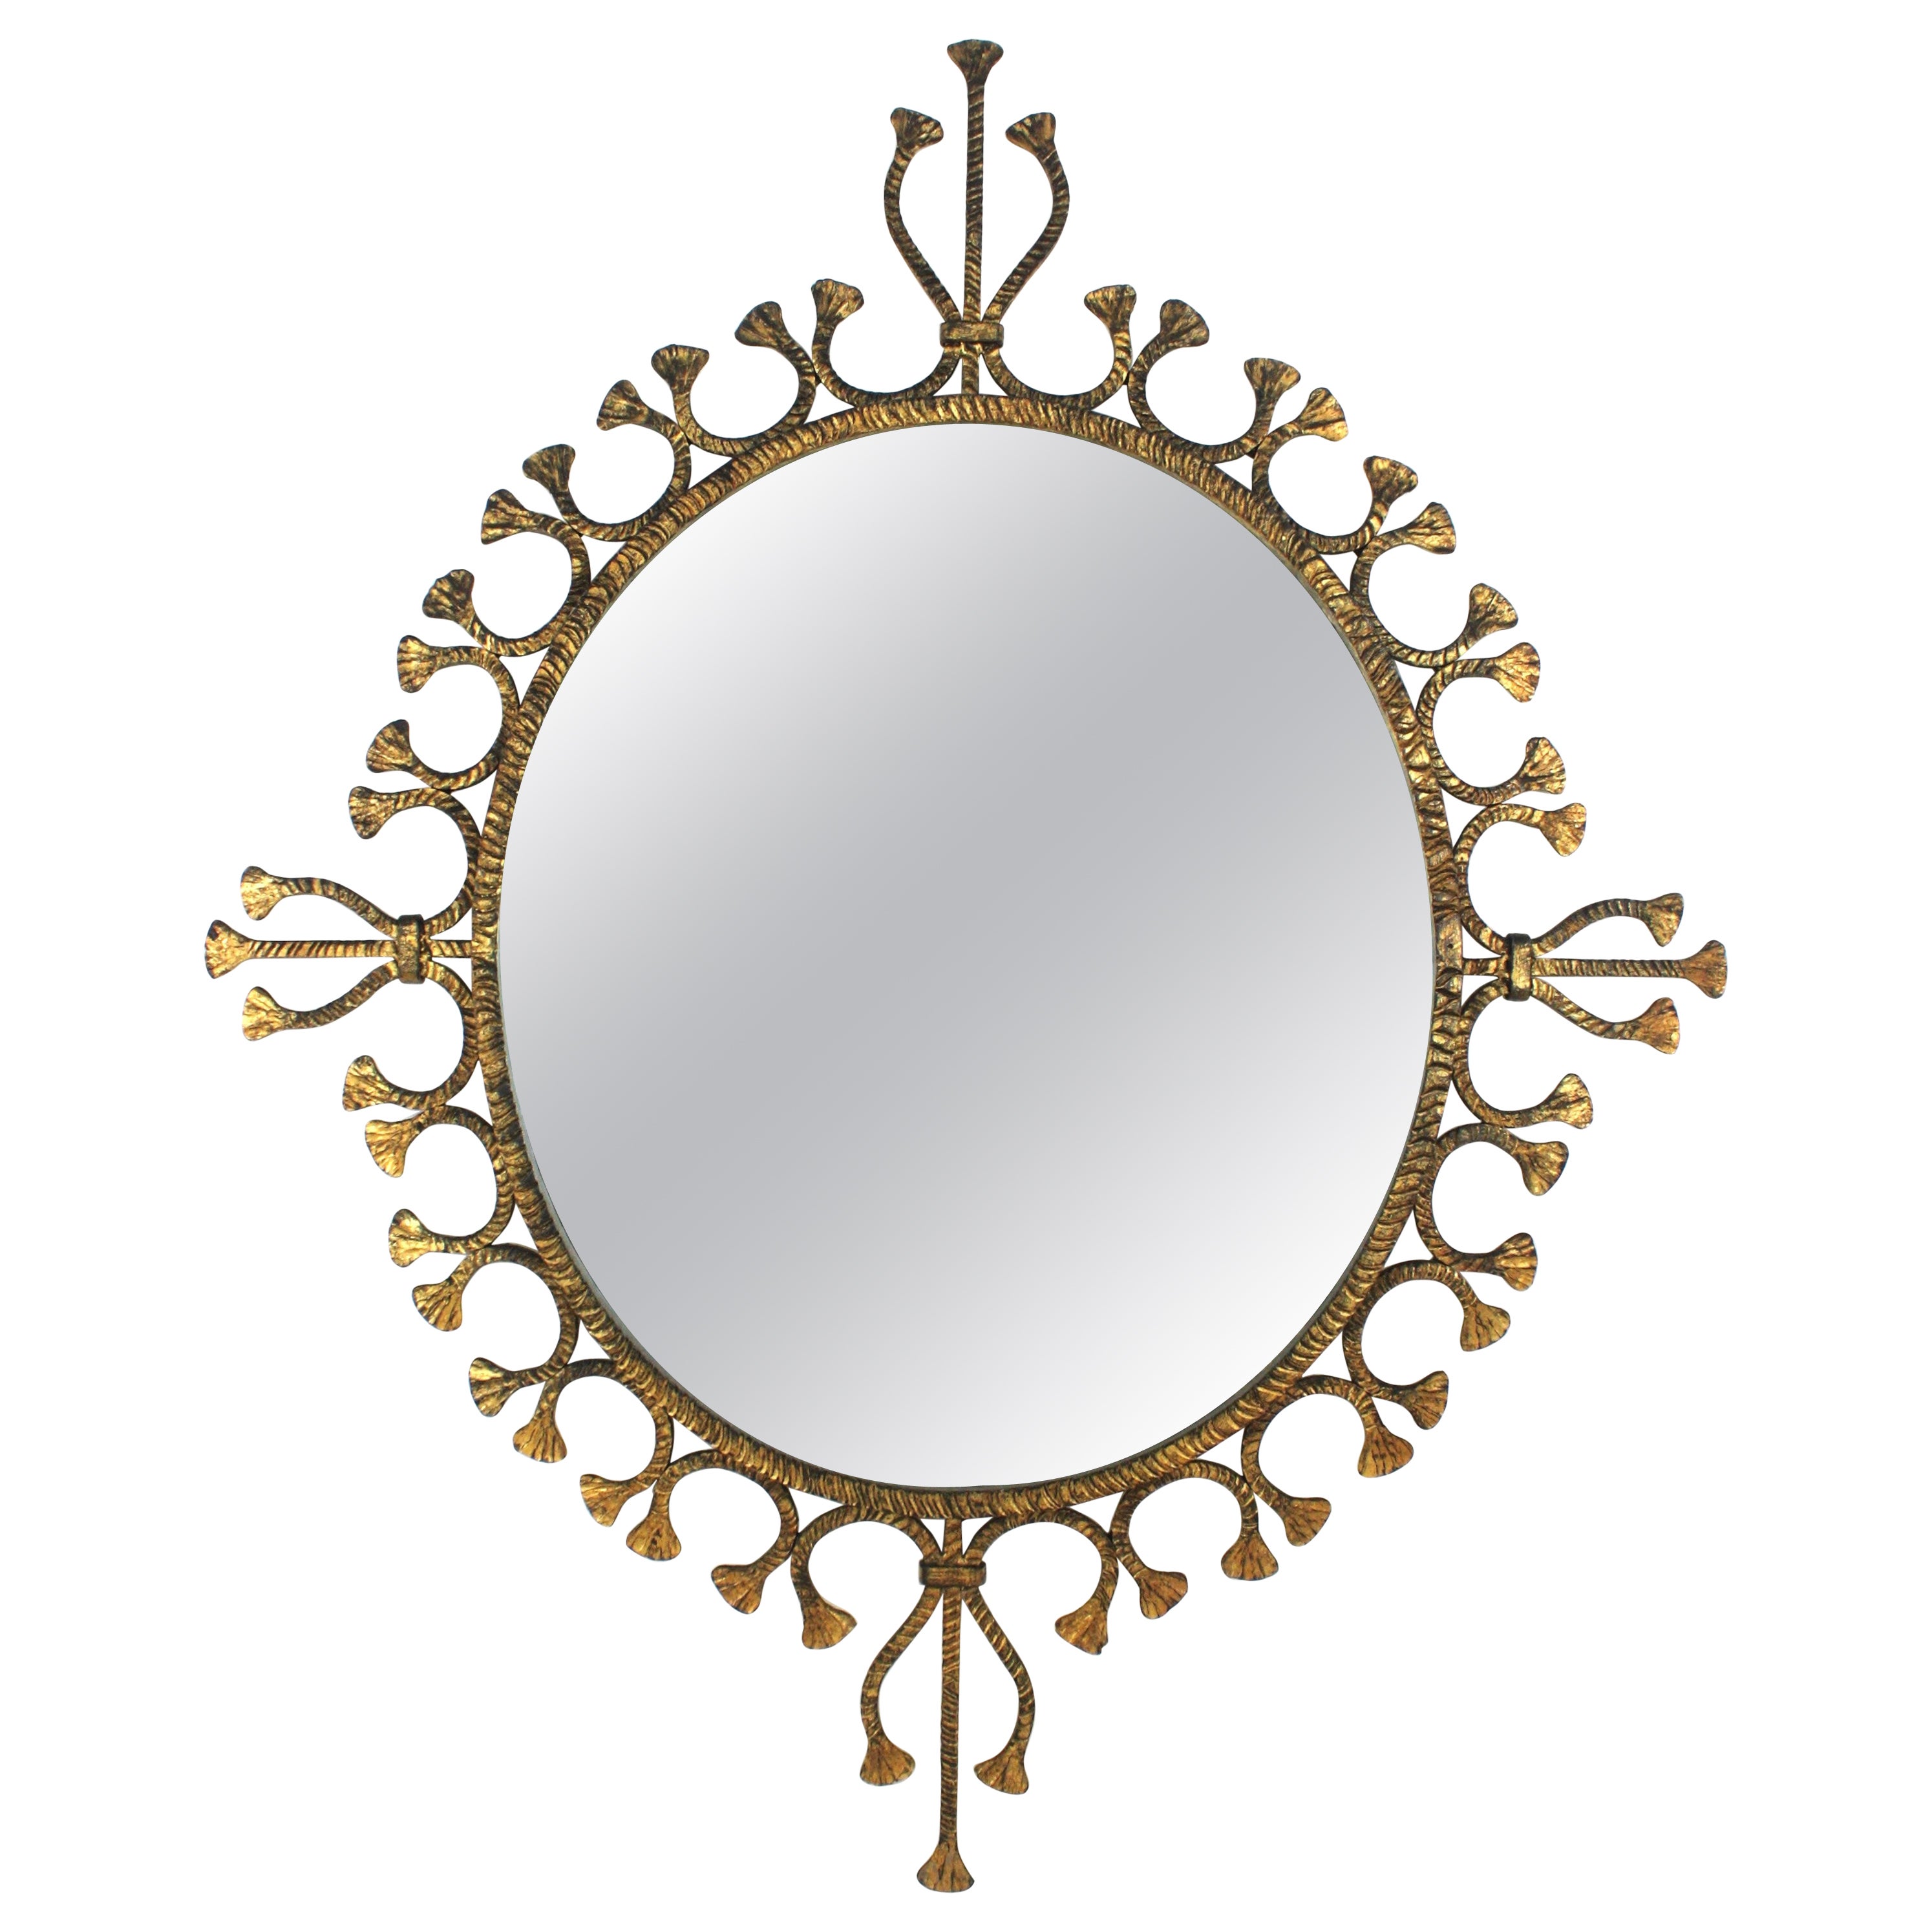 Spanish Hollywood Regency Gilt Wrought Iron Oval Sunburst Mirror / Wall Mirror For Sale